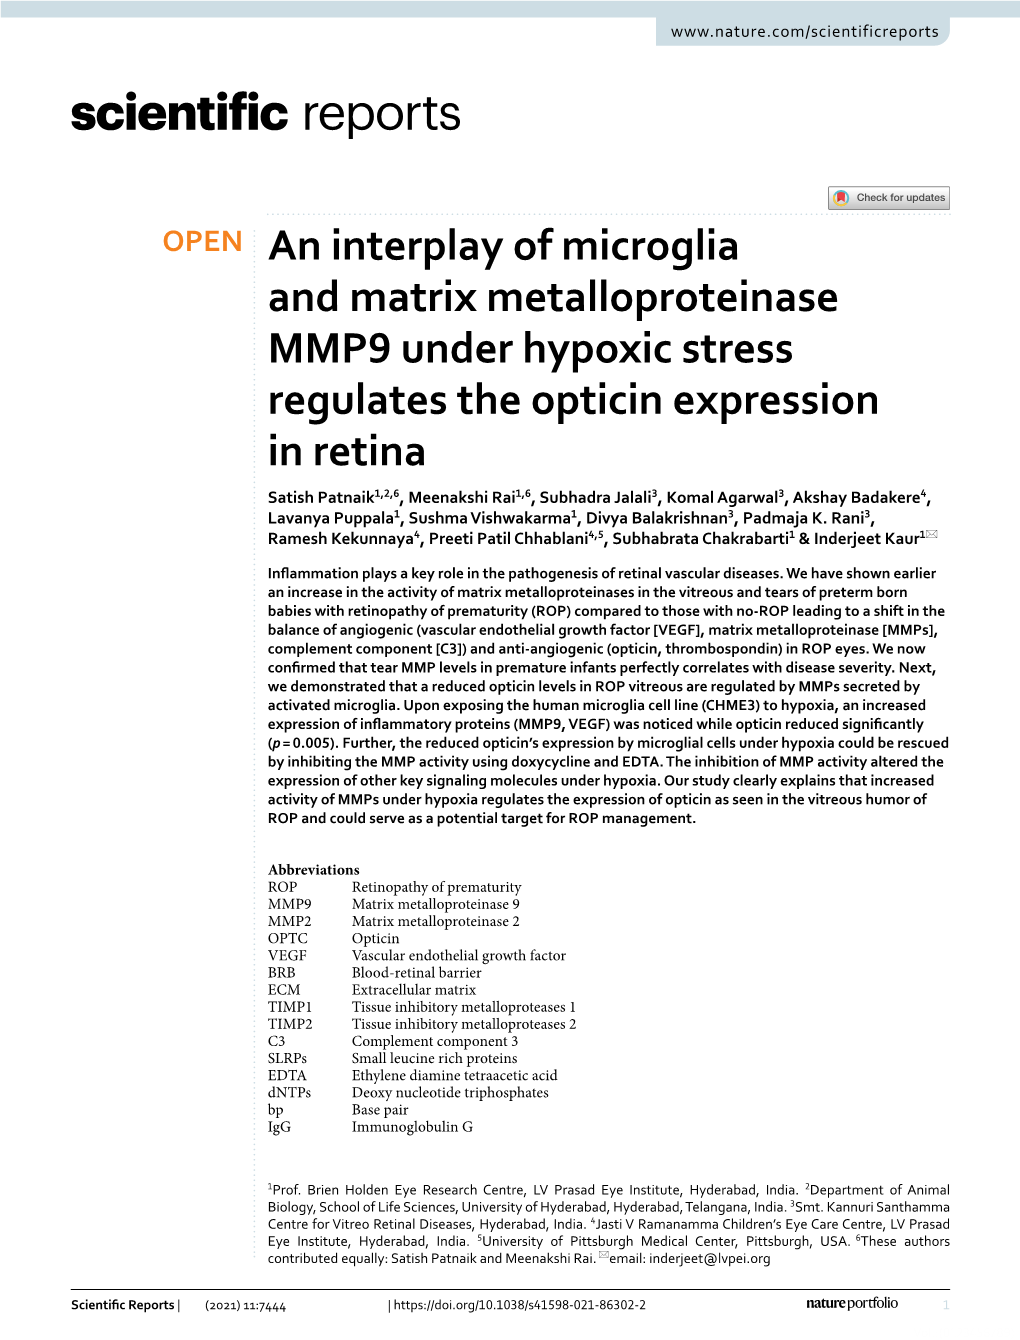 An Interplay of Microglia and Matrix Metalloproteinase MMP9 Under